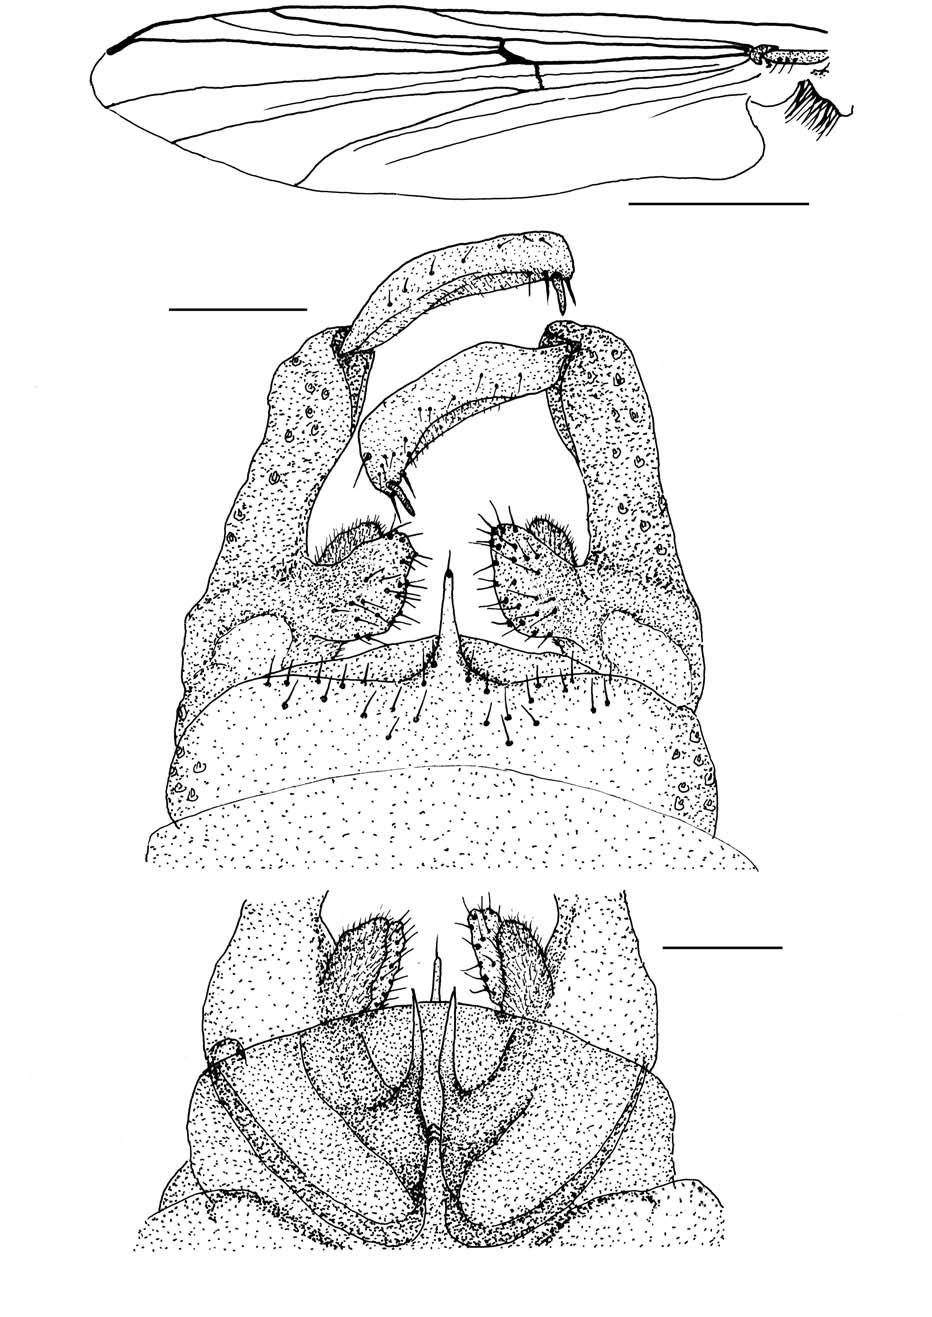 Fauna of Non-biting Midges from Soyang River Fig. 6. Monodiamesa bathyphila (Kieffer, 98) (Male).